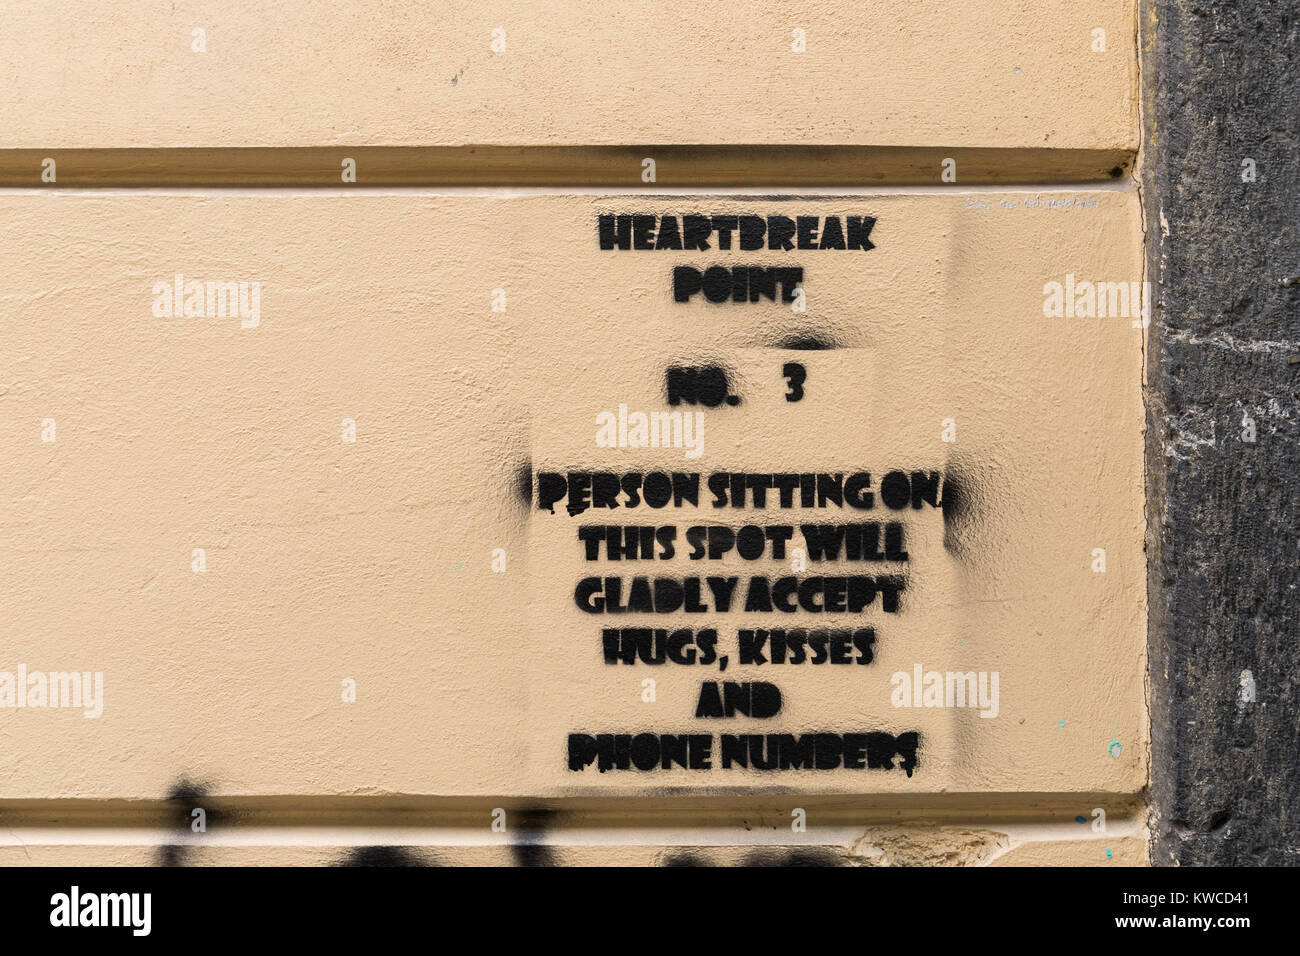 Heartbreak point graffiti - Ljubljana, Slovenia Stock Photo